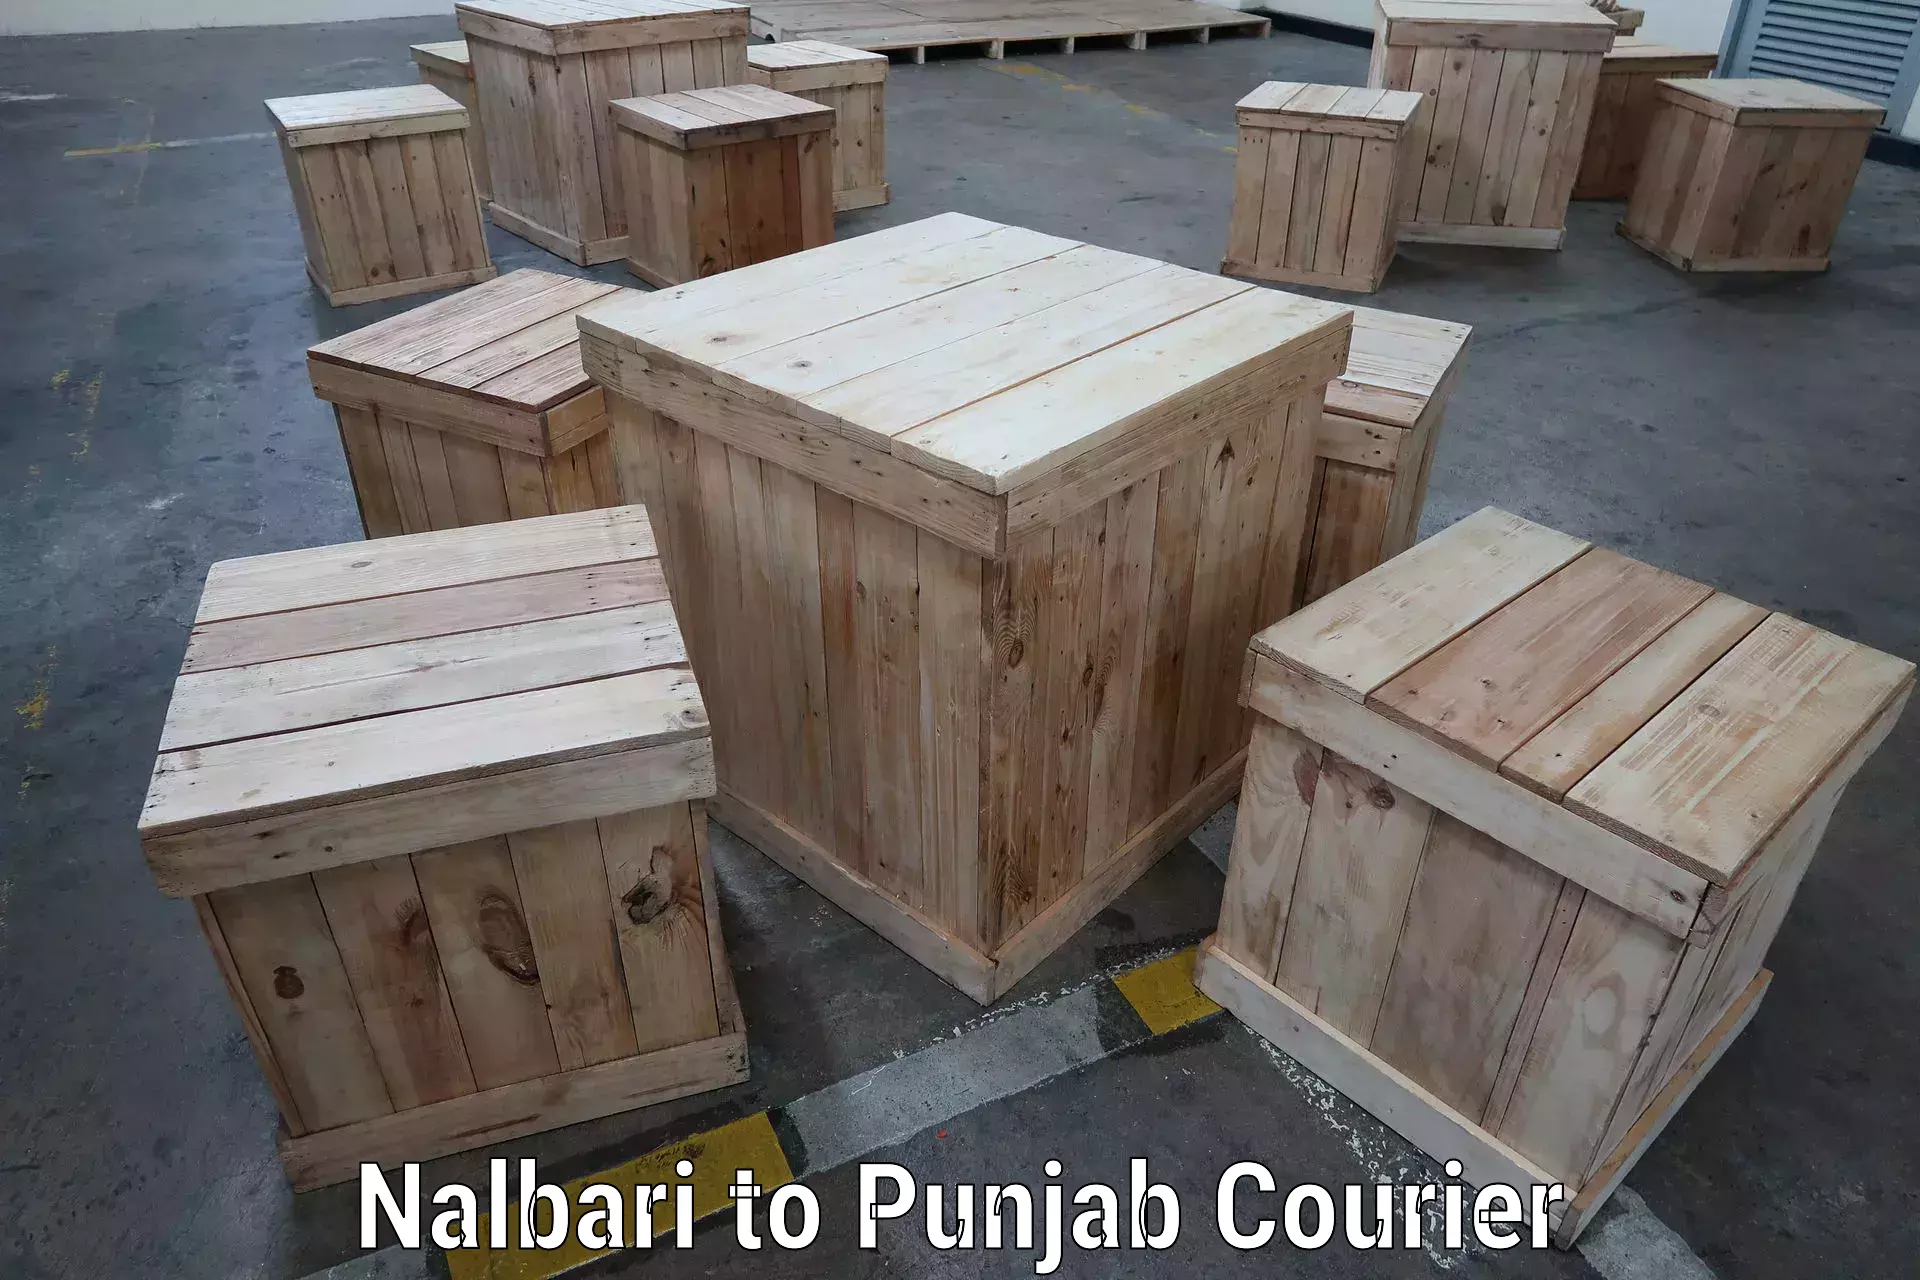 On-demand shipping options Nalbari to Mohali